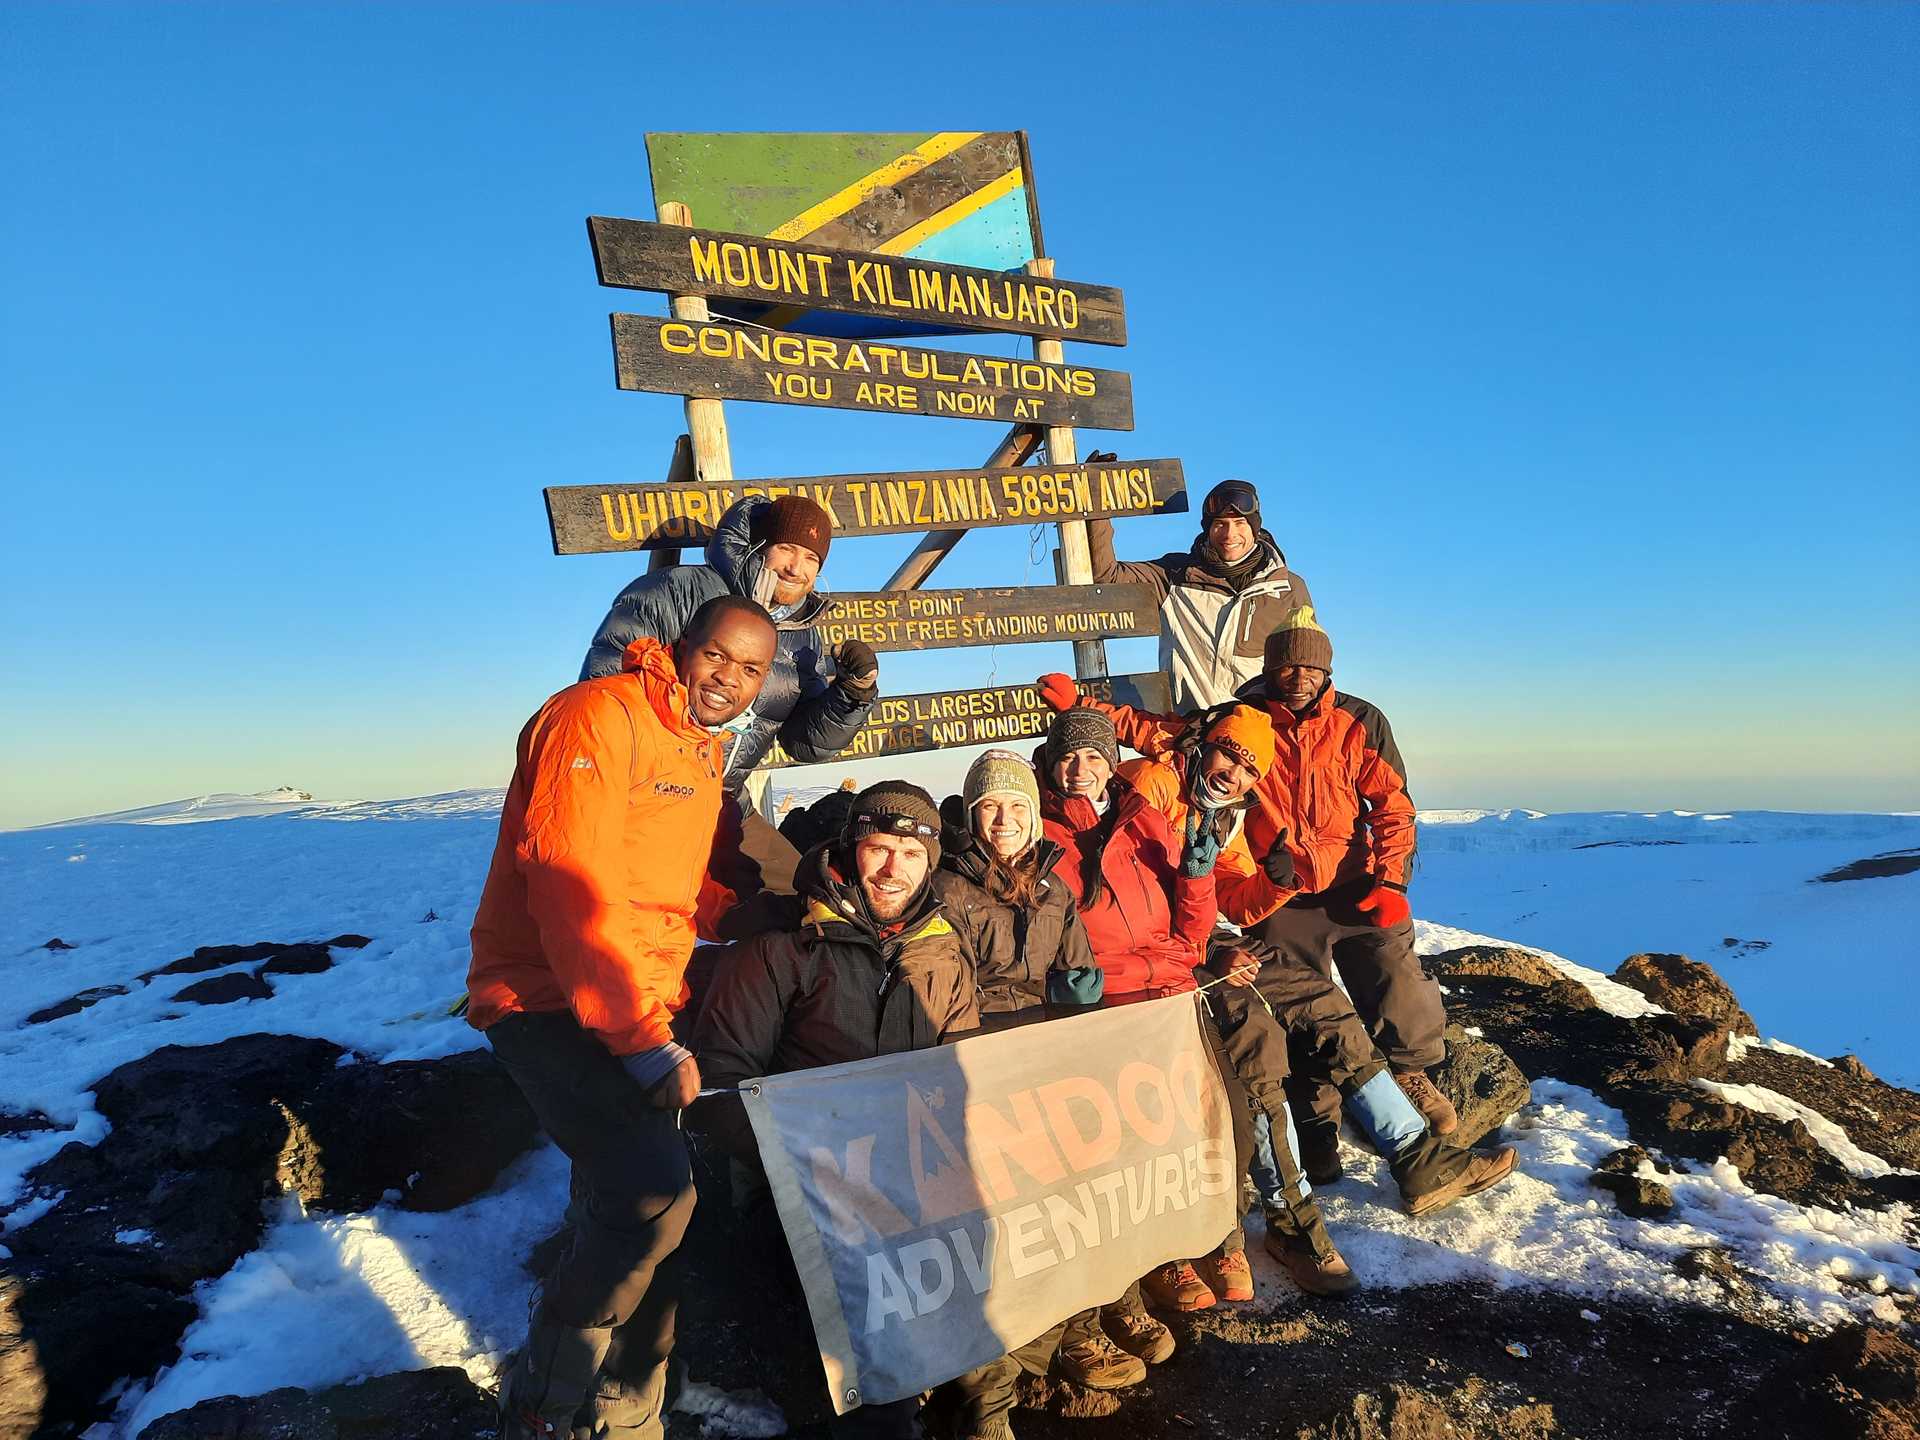 How to prepare for climbing Mount Kilimanjaro